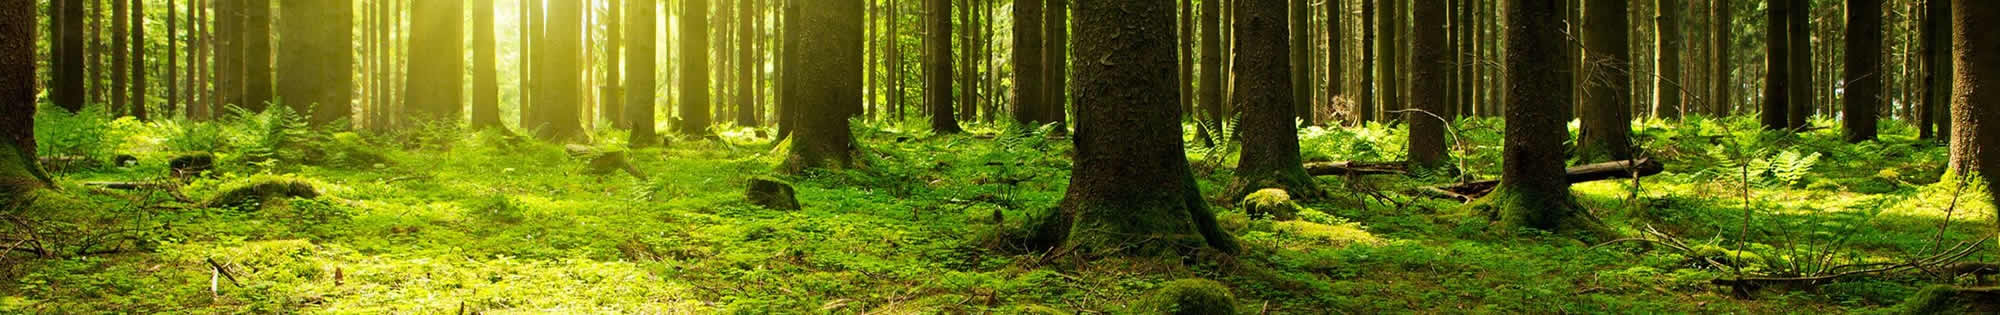 Environment: forest floor